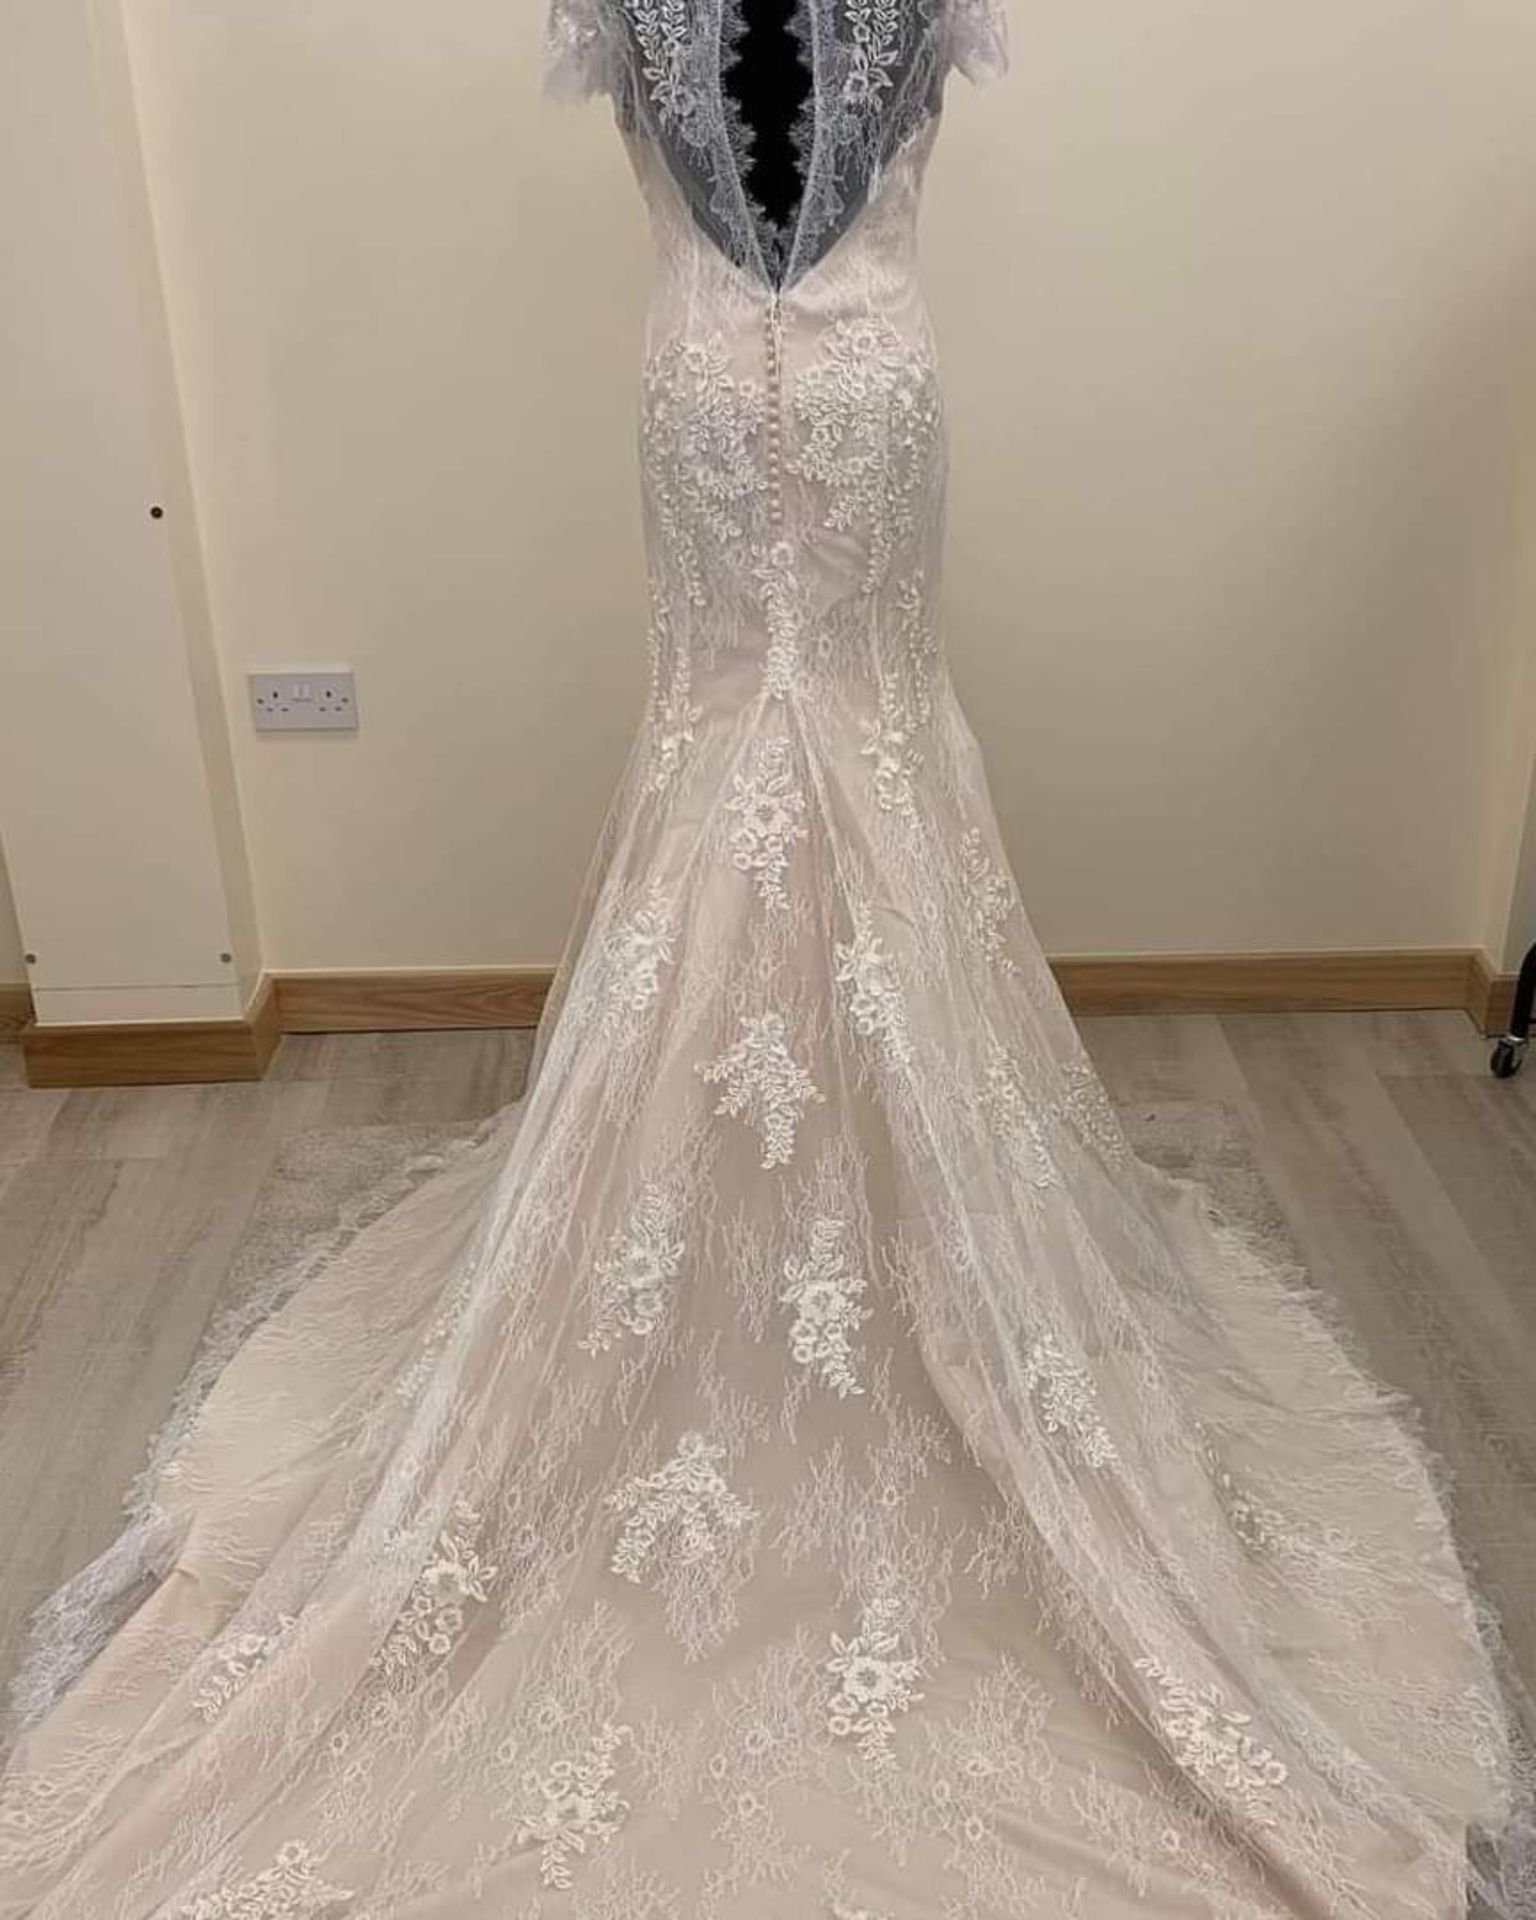 Eternity Bridal Wedding dress AC635. Size 12 champagne and ivory